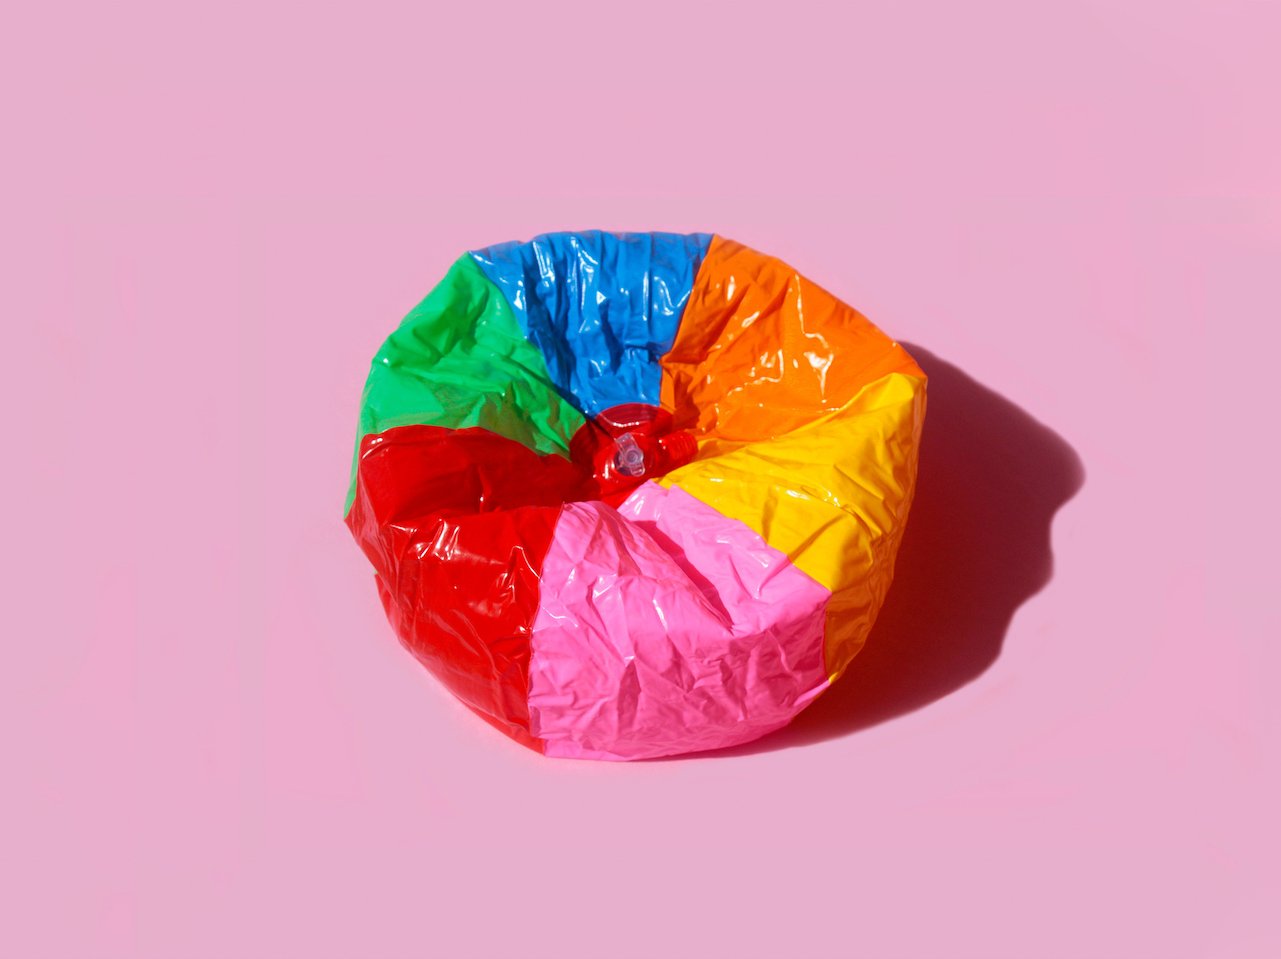 A photo of a colourful deflated beach ball